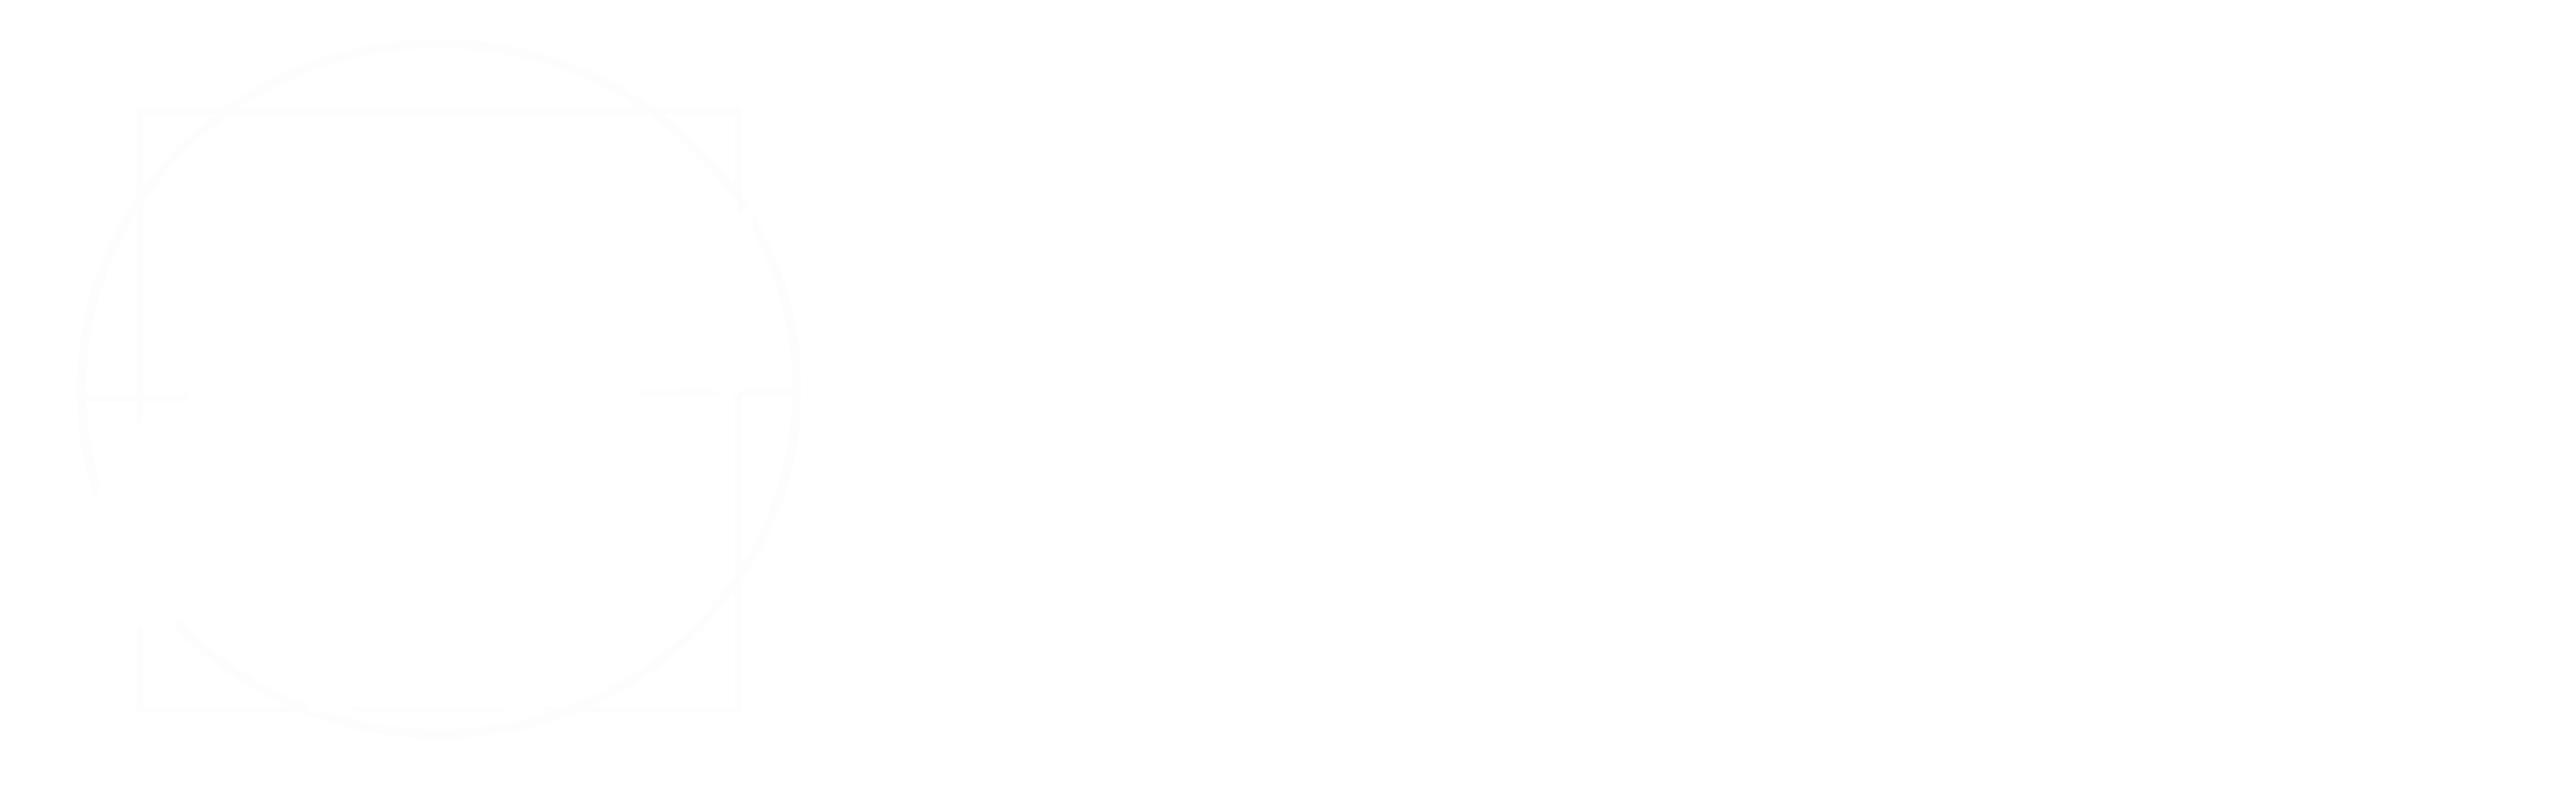 The Horse Center